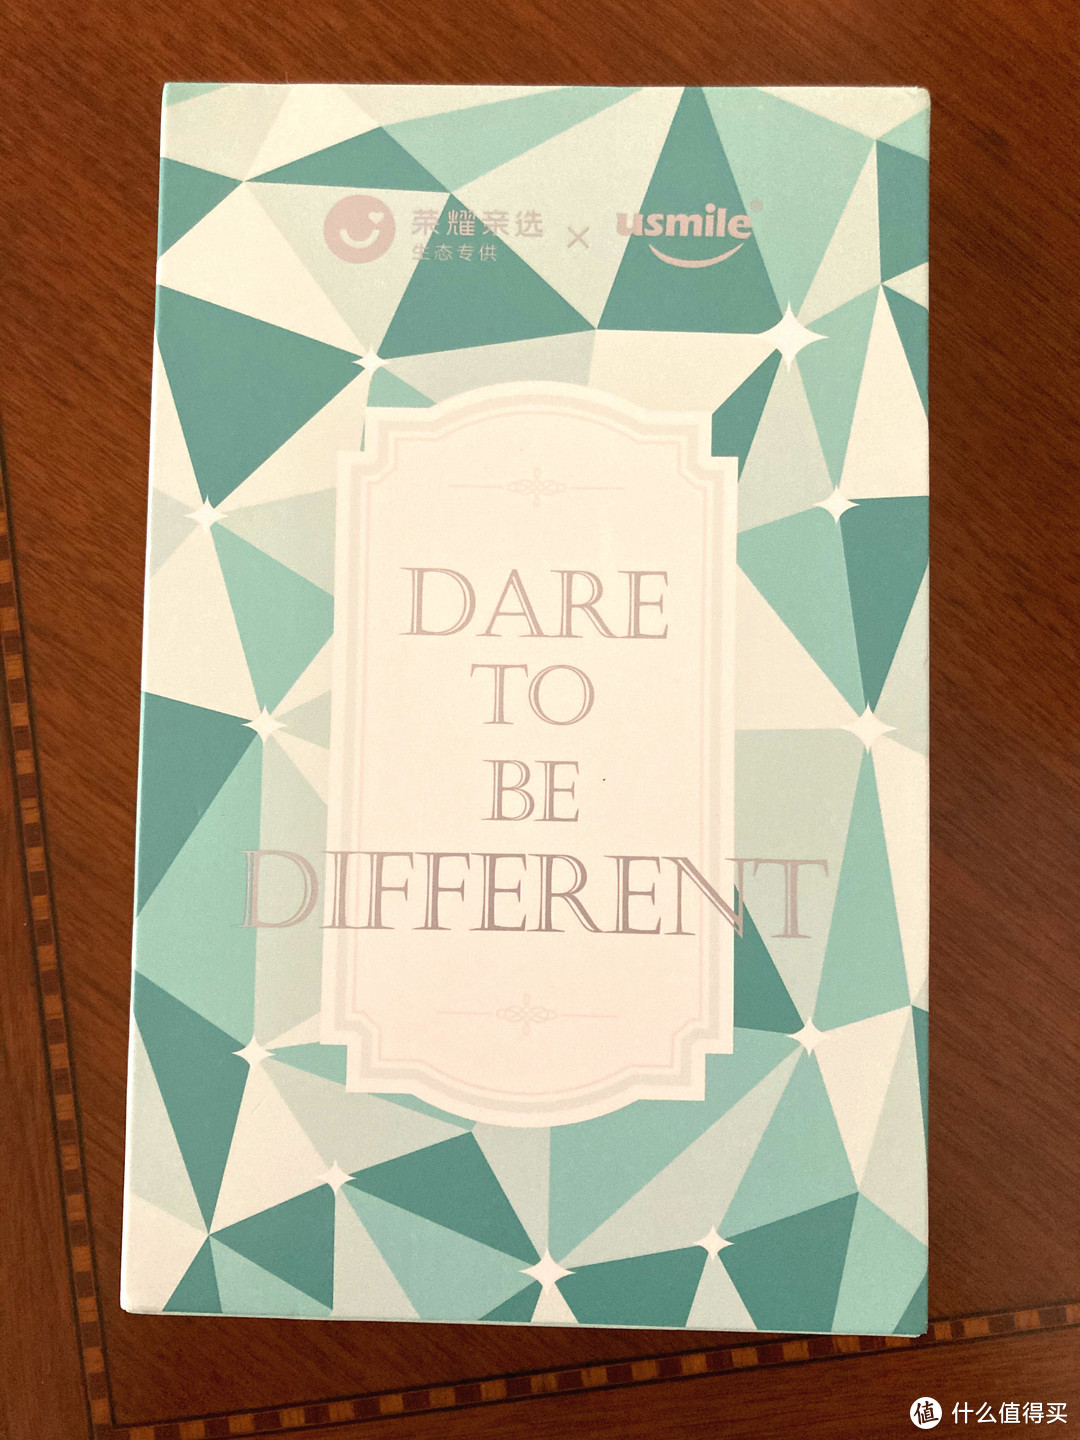 dare to be different，这slogan还是很飒的